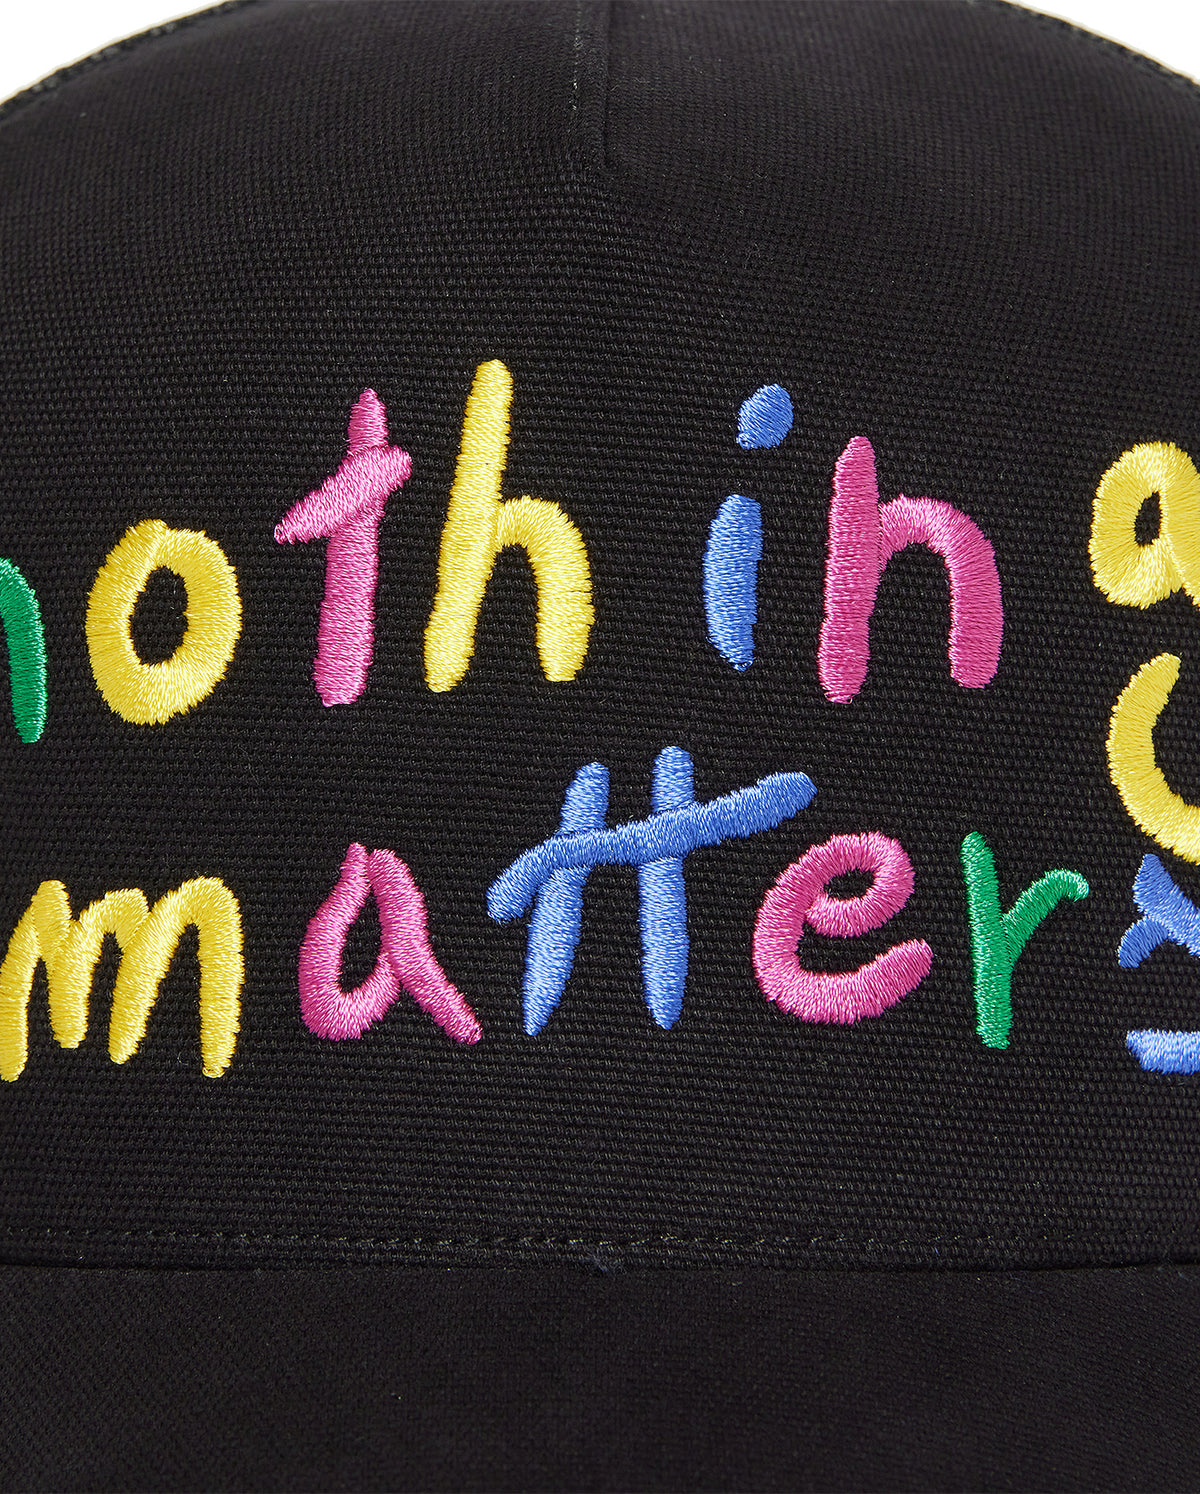 Nothing Matters Trucker Hat